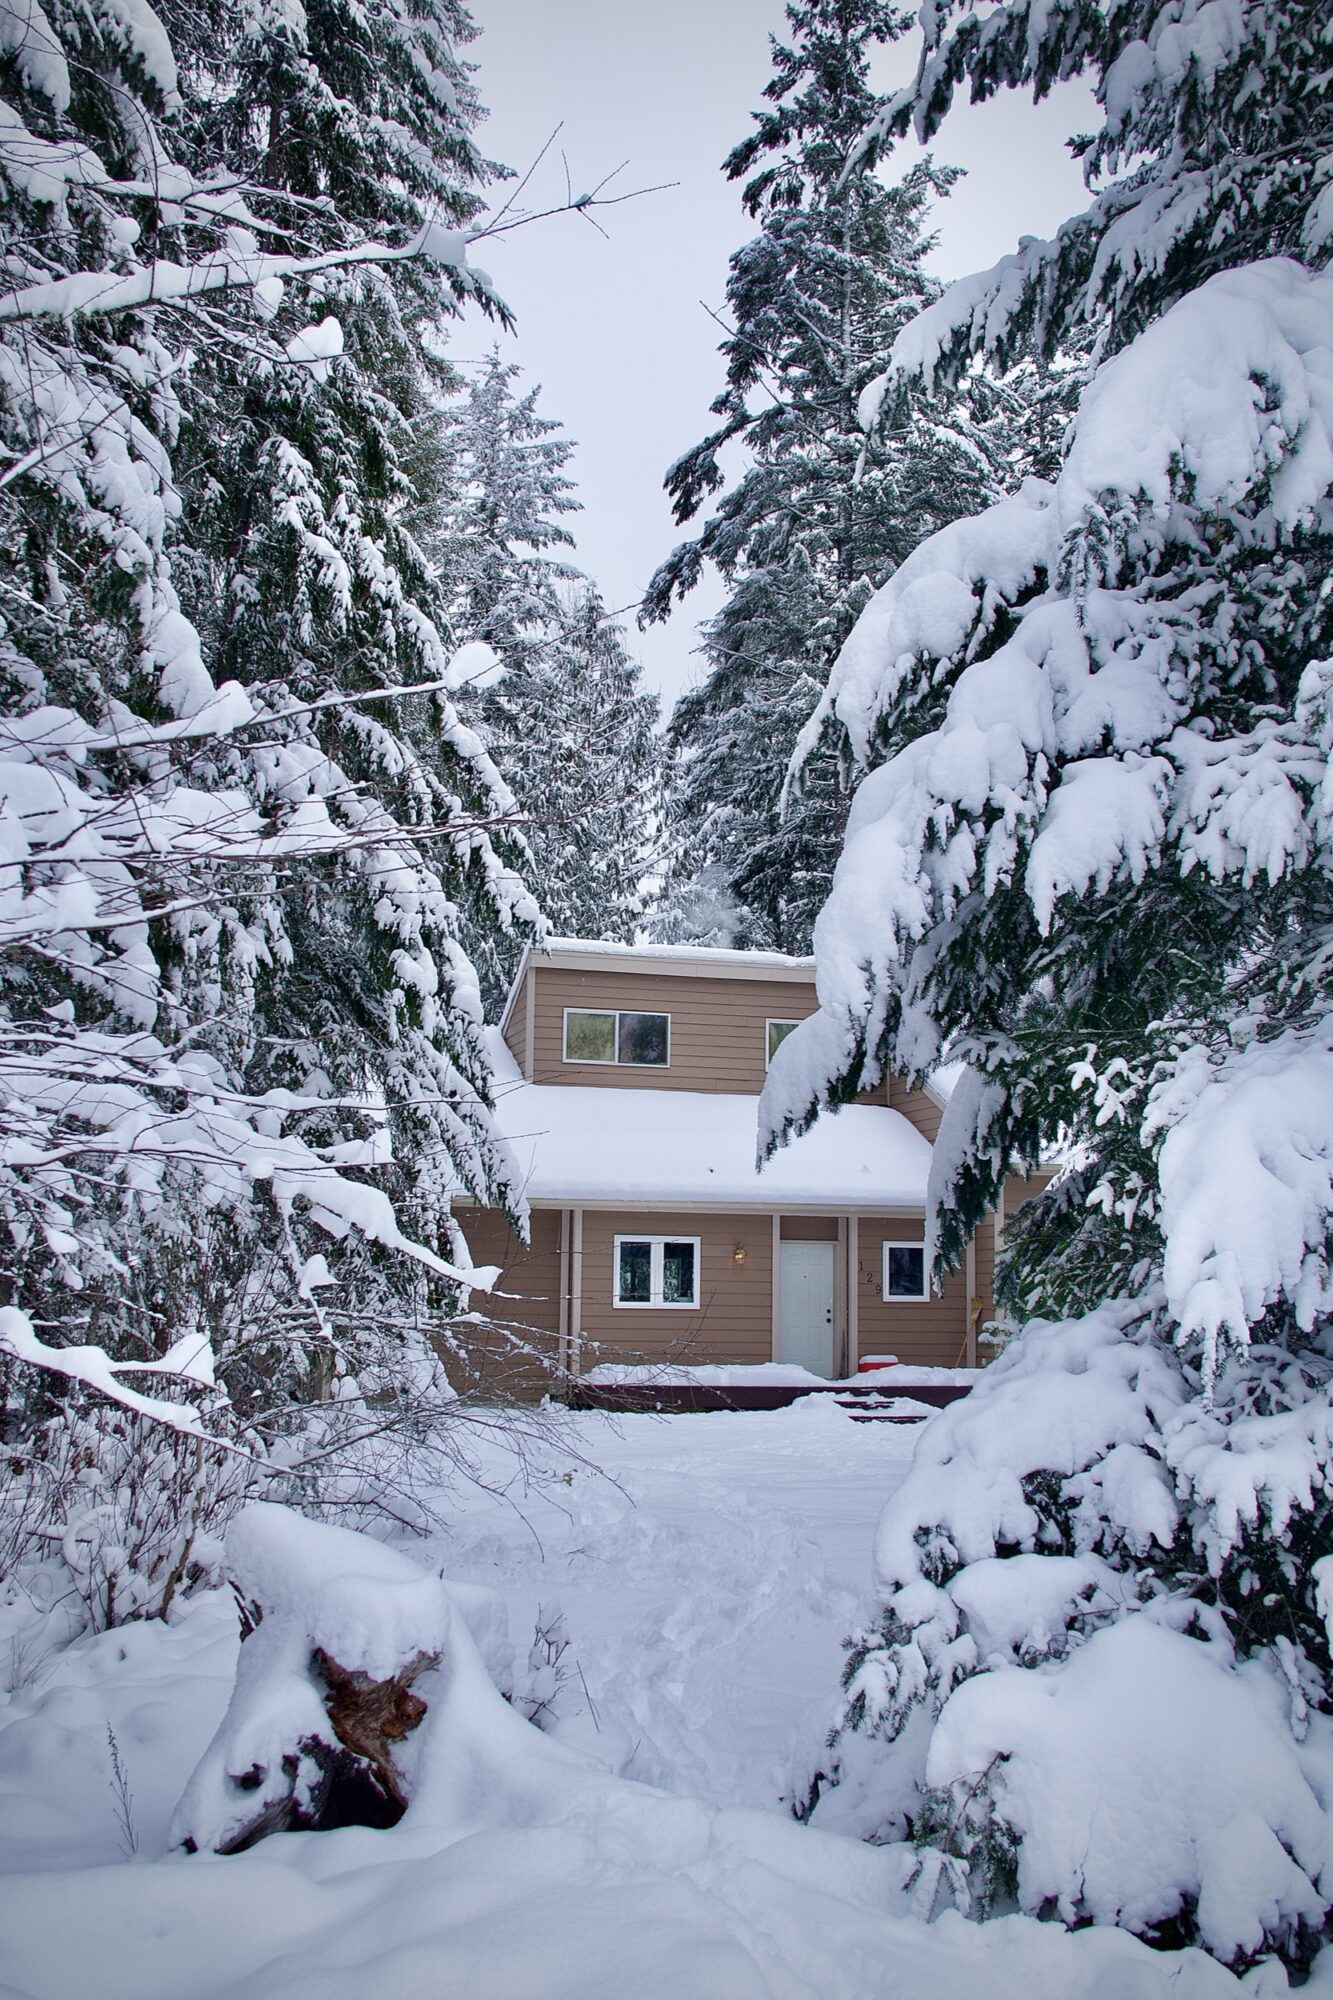 [slide] Snowy Home